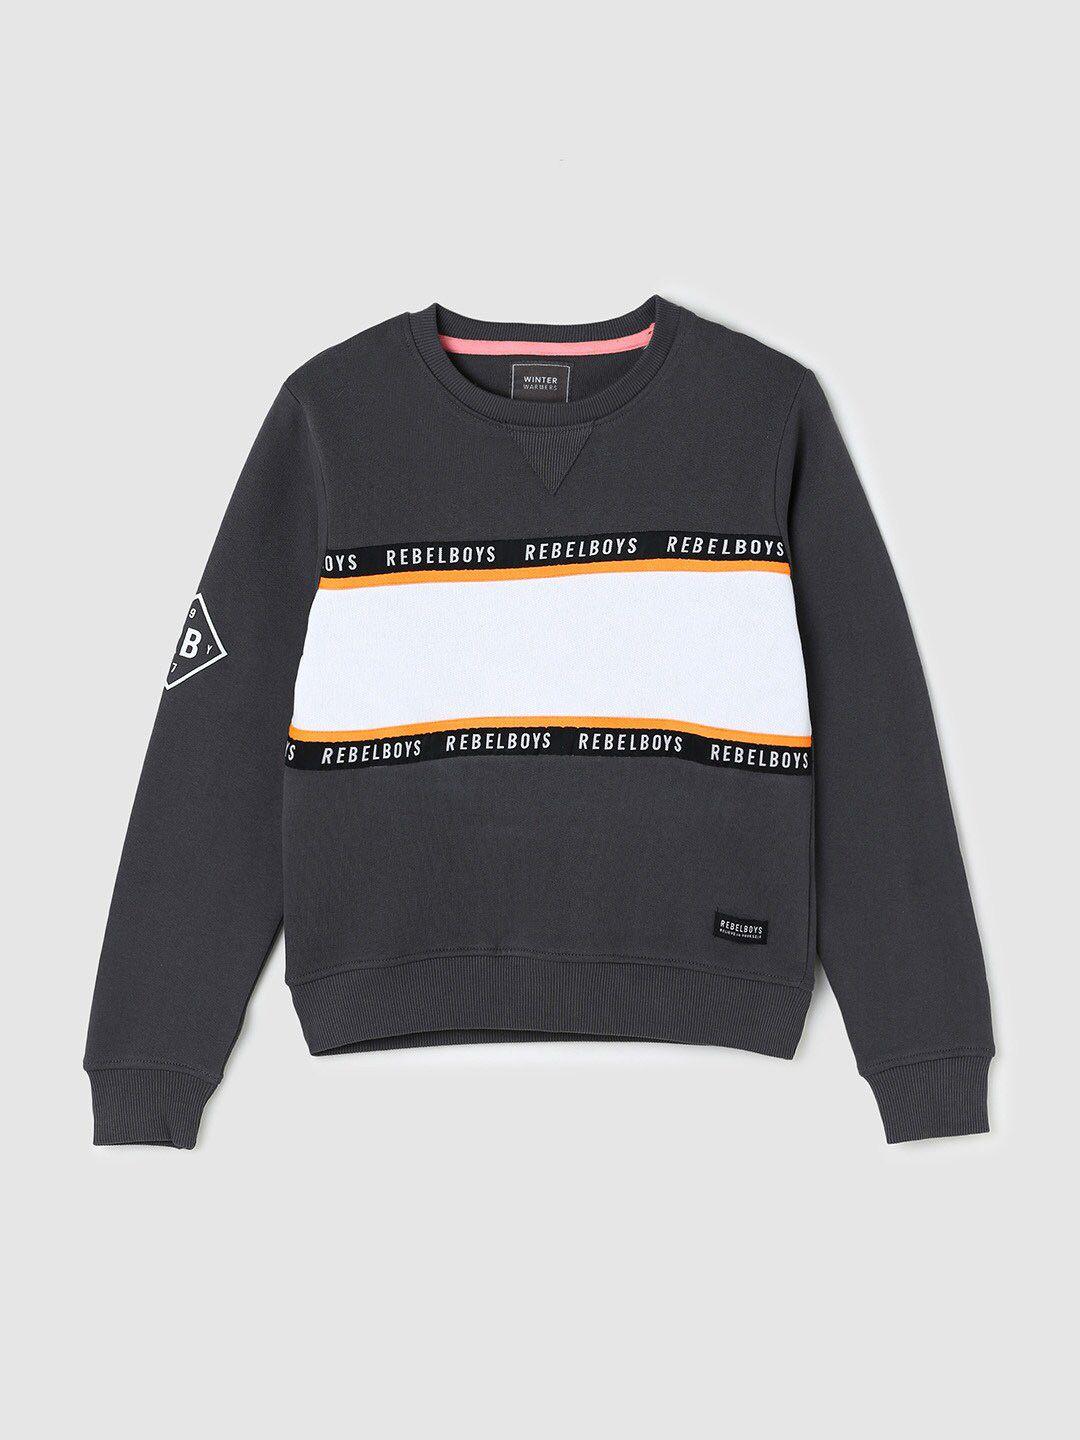 max boys grey colourblocked sweatshirt